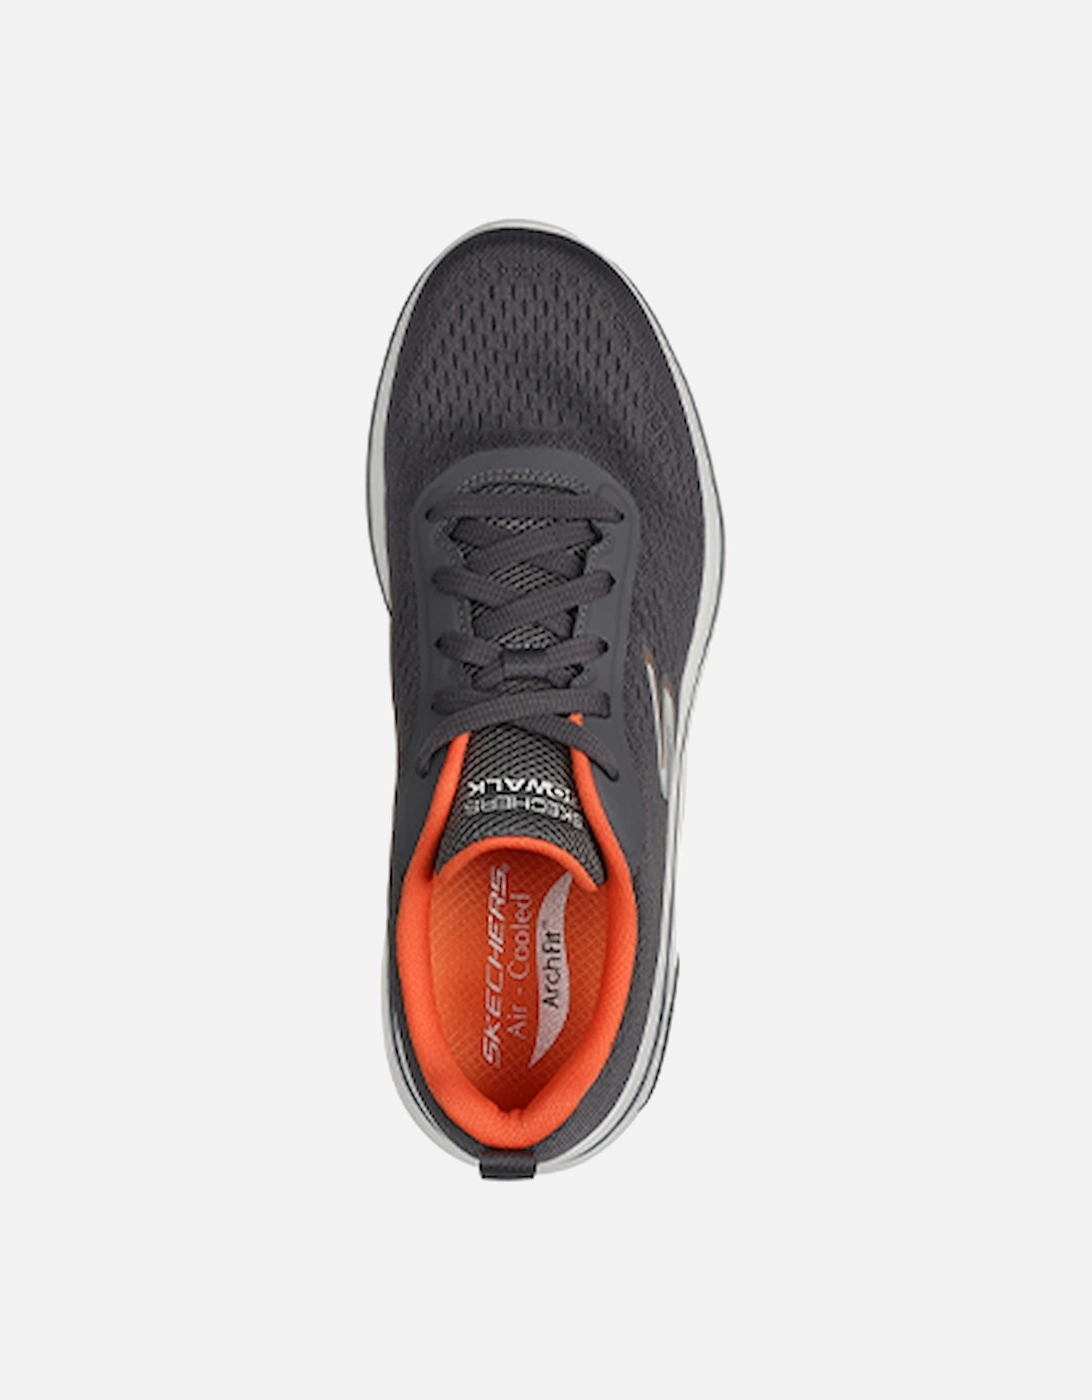 Skechers Men's Go Walk Arch Fit 2.0 Idyllic 2 Charcoal Orange